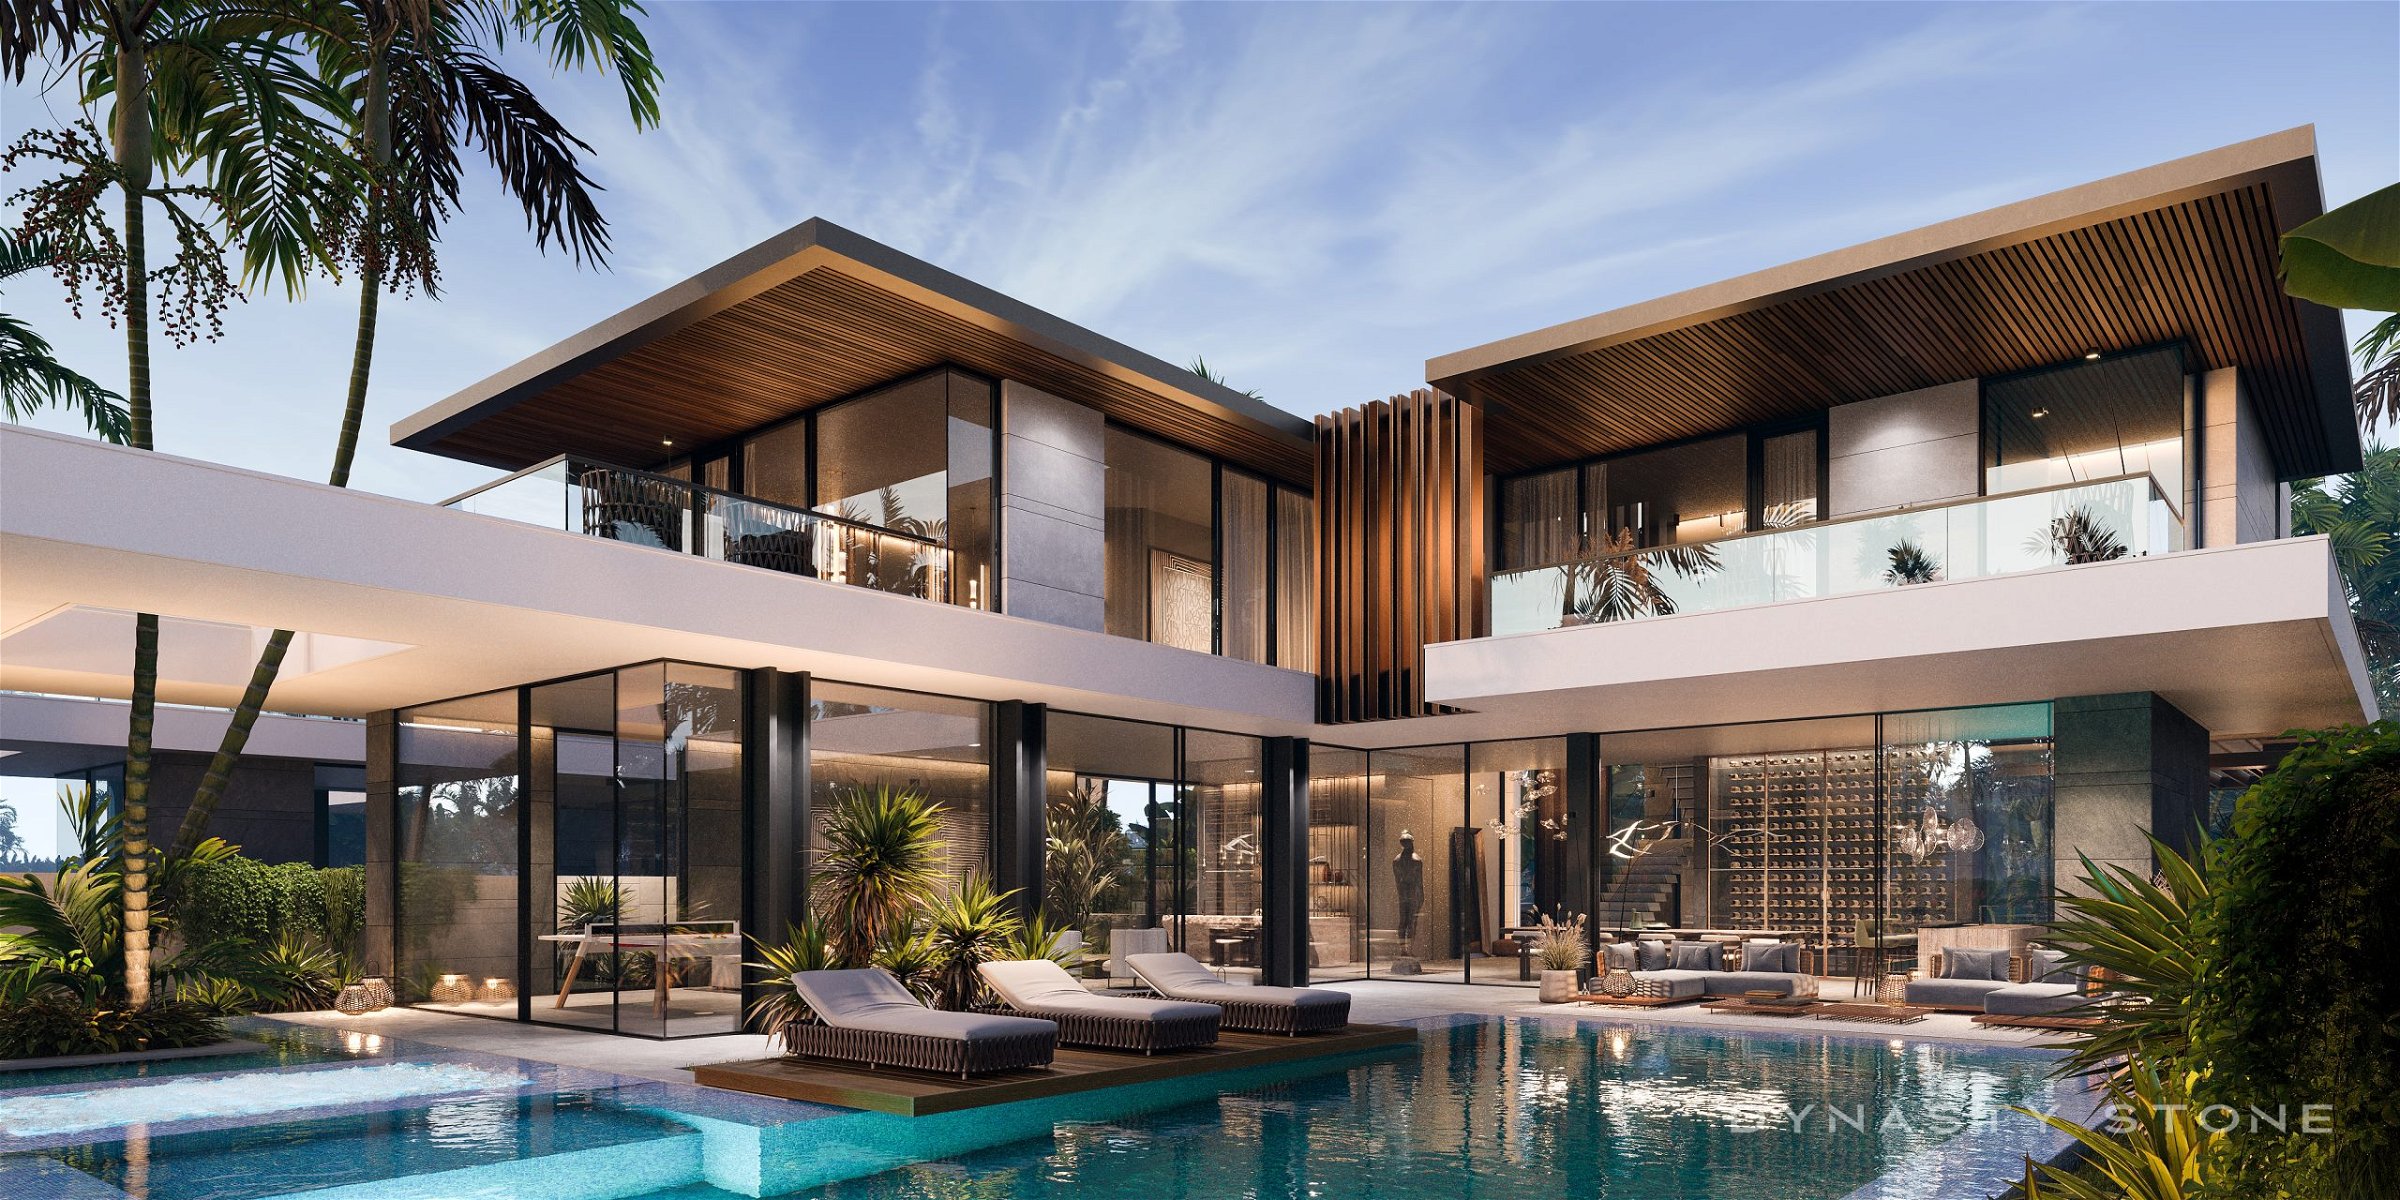 Isola Palms Phuket - New Project of Ultra-Luxury 4-Bedroom Villas by Top Developer